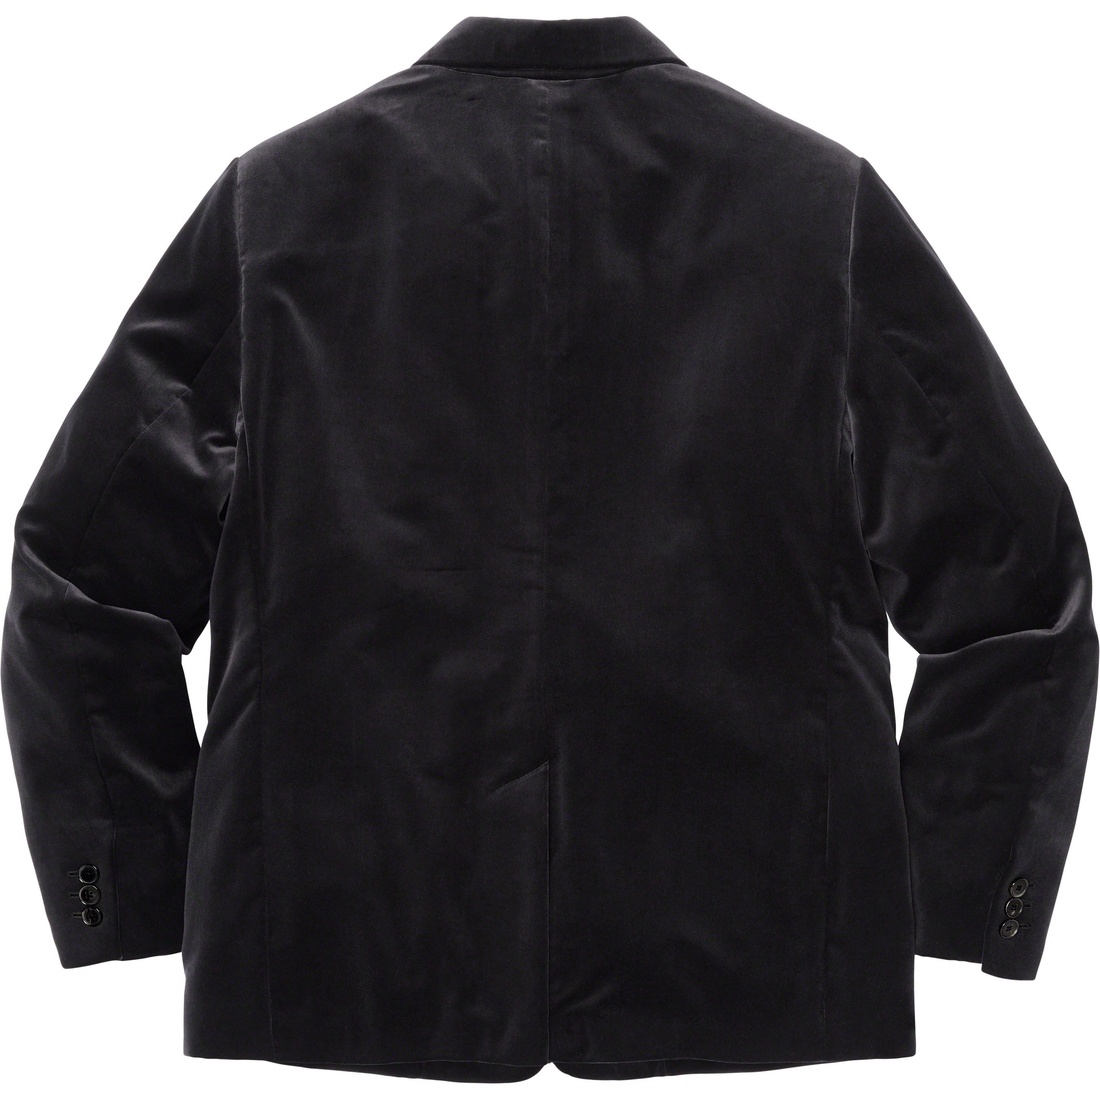 Details on Velvet Suit Black from fall winter
                                                    2023 (Price is $668)